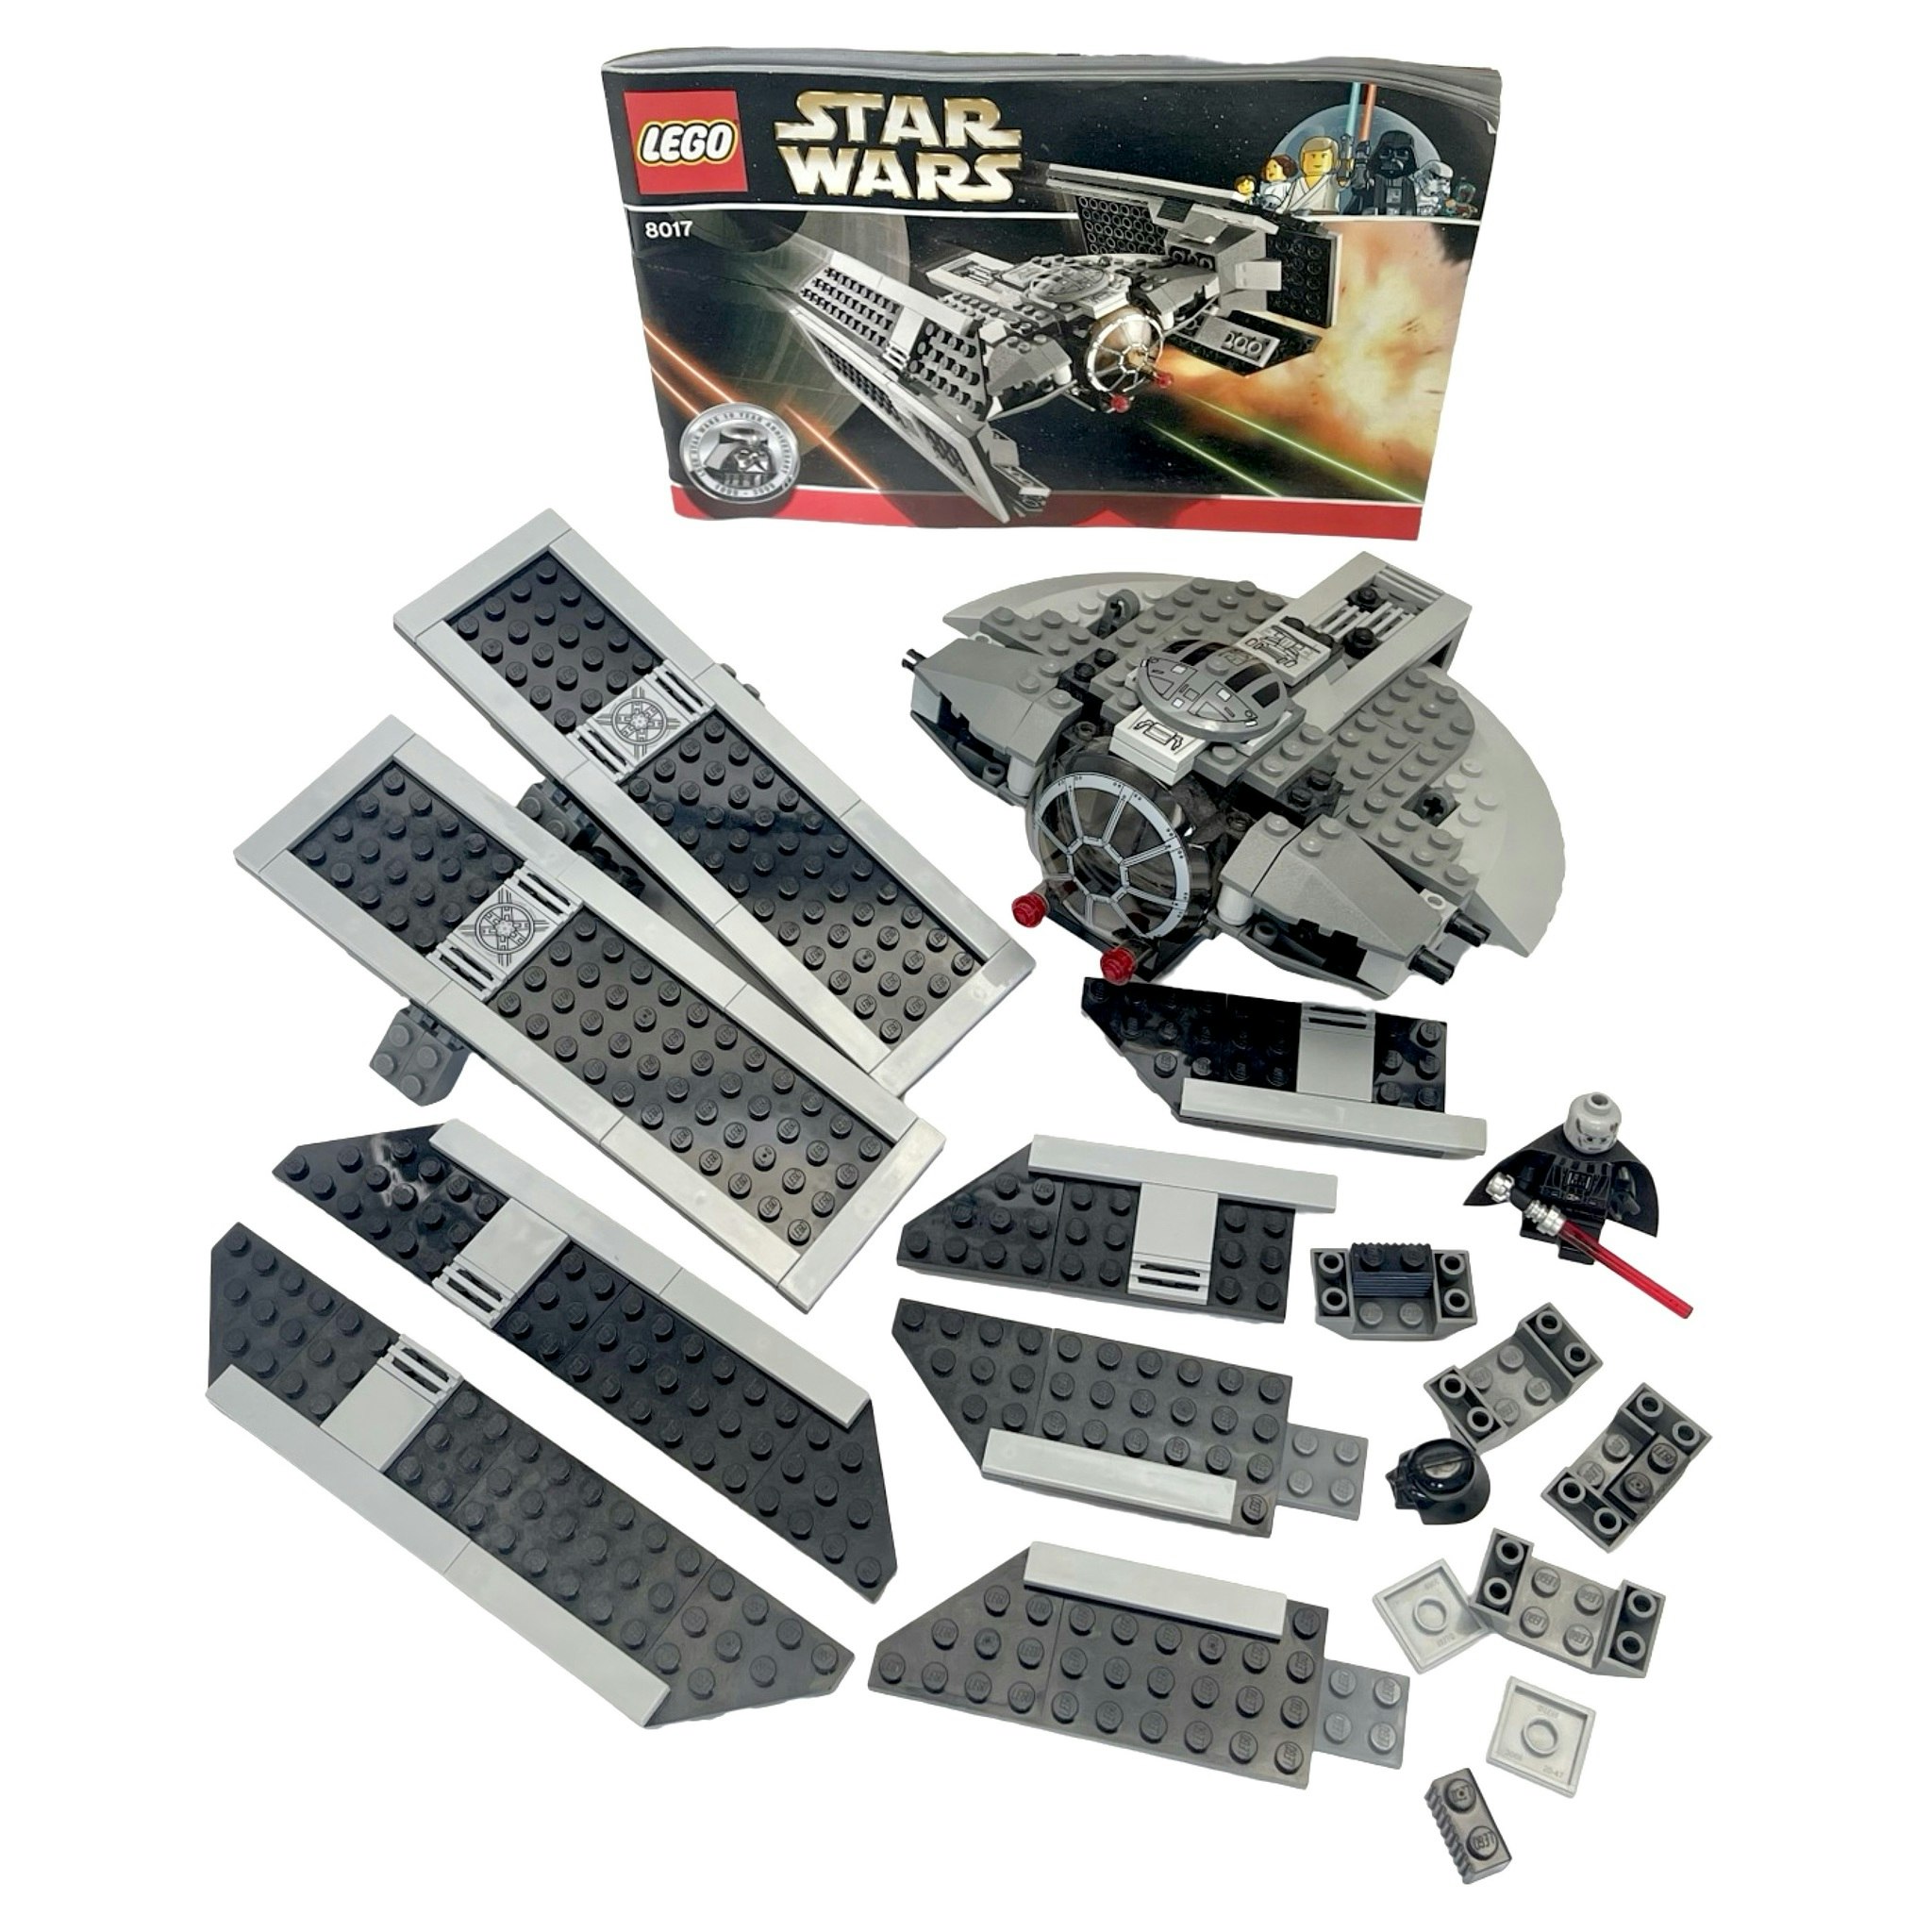 Lego Star Wars 8017 – Darth Vader's TIE Fighter